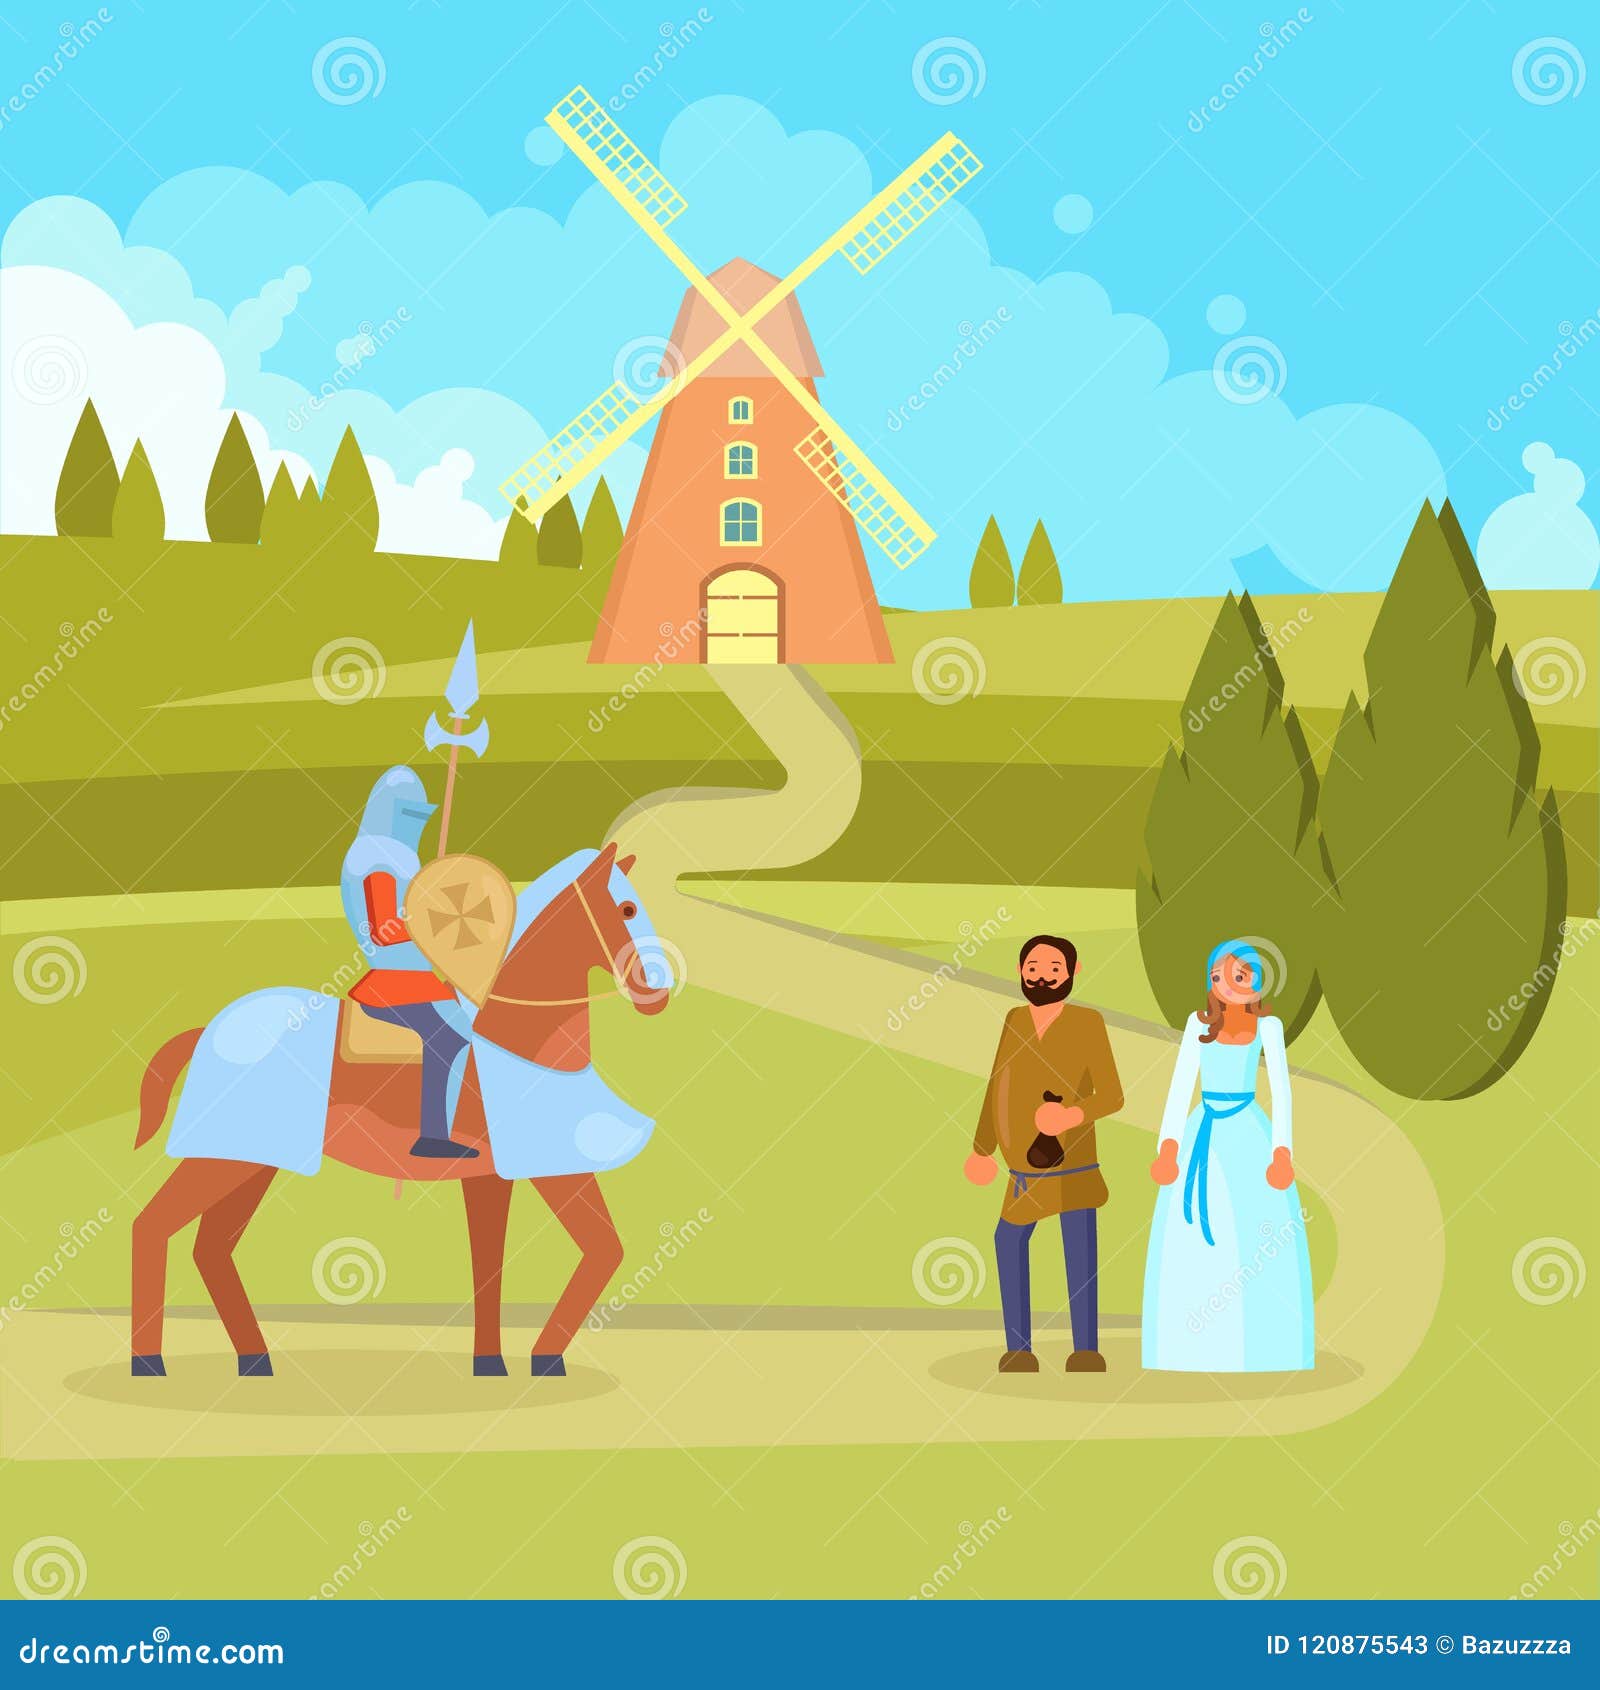 Knight riding horse illustration, Knight Cartoon Illustration, heroic knight,  speech Balloon, happy Birthday Vector Images, shield png